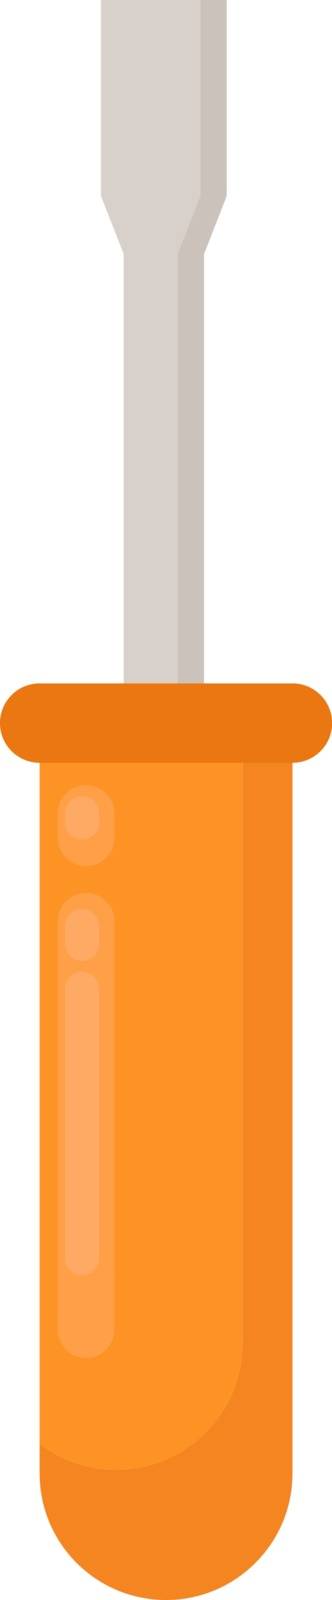 Orange screwdriver, illustration, vector on white background